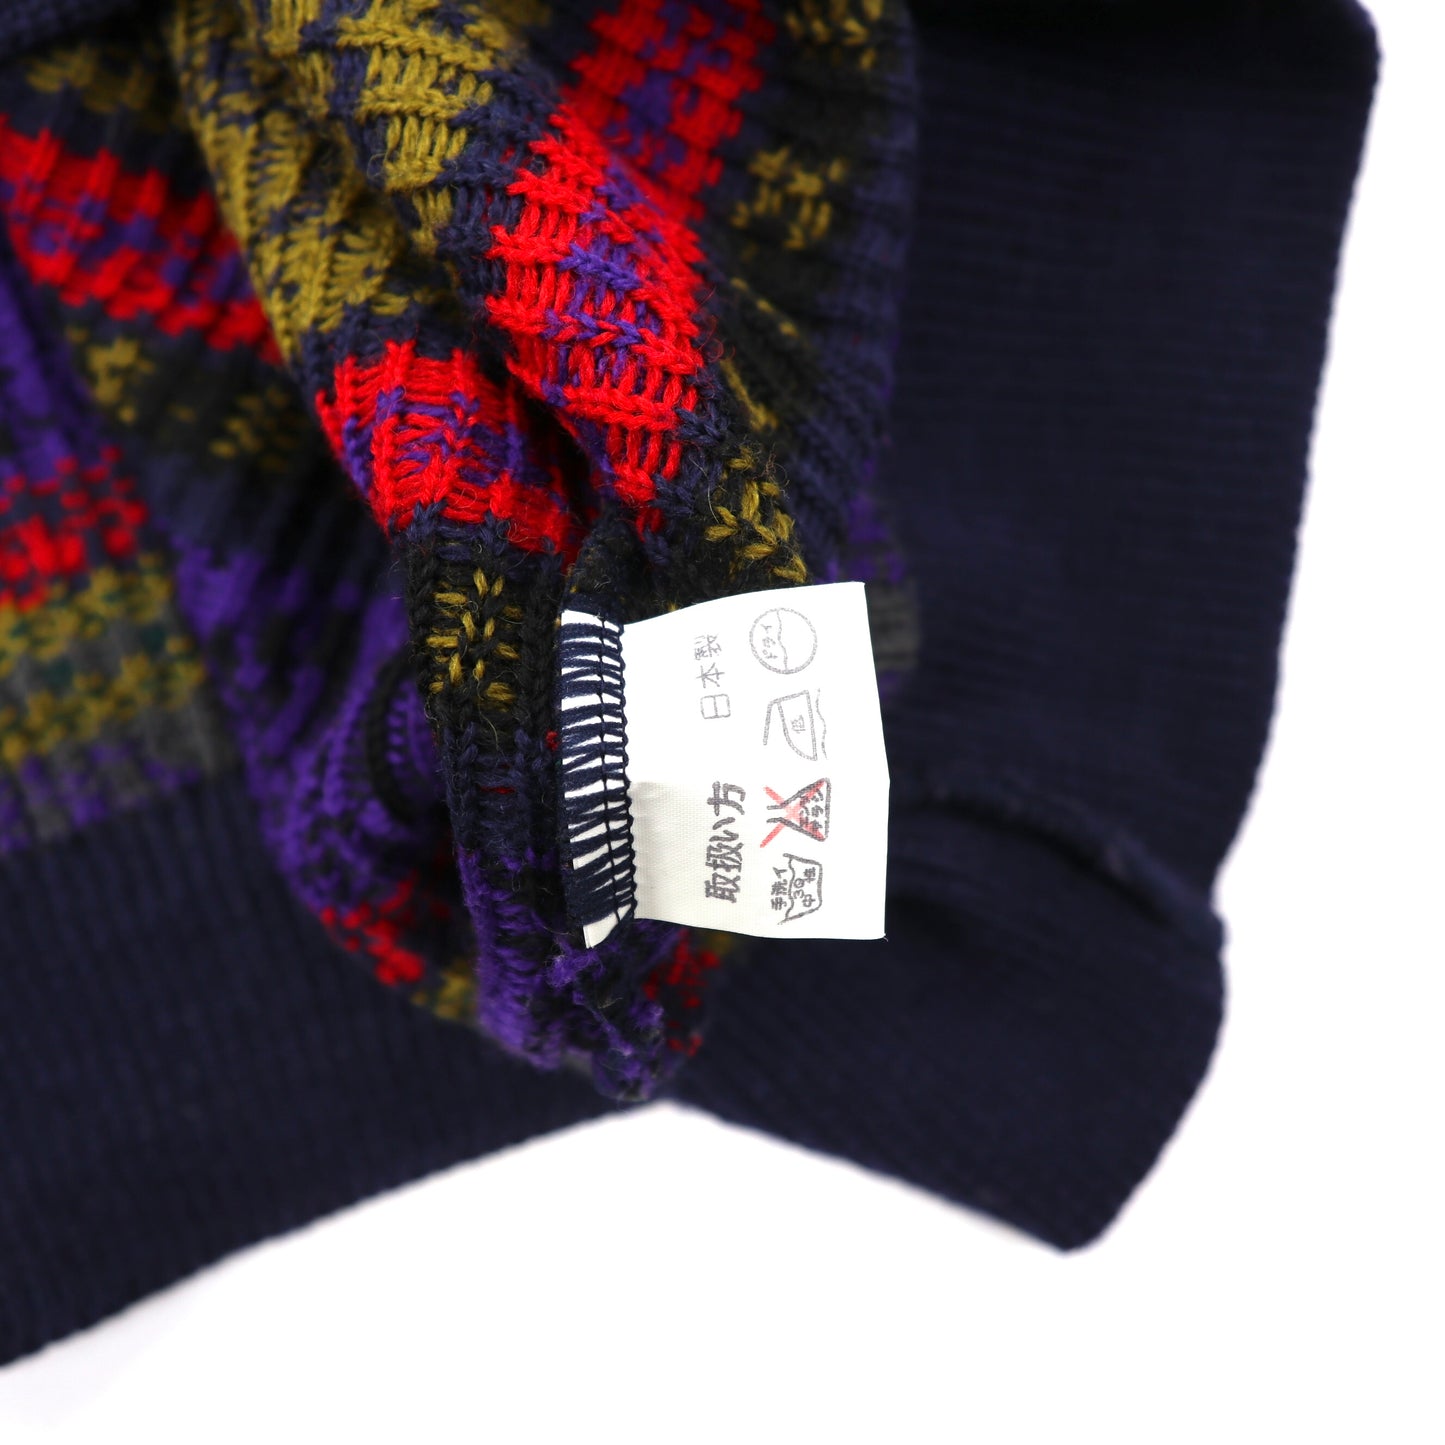 MERDOVER Vネックセーター XL ネイビー ウール 総柄 日本製